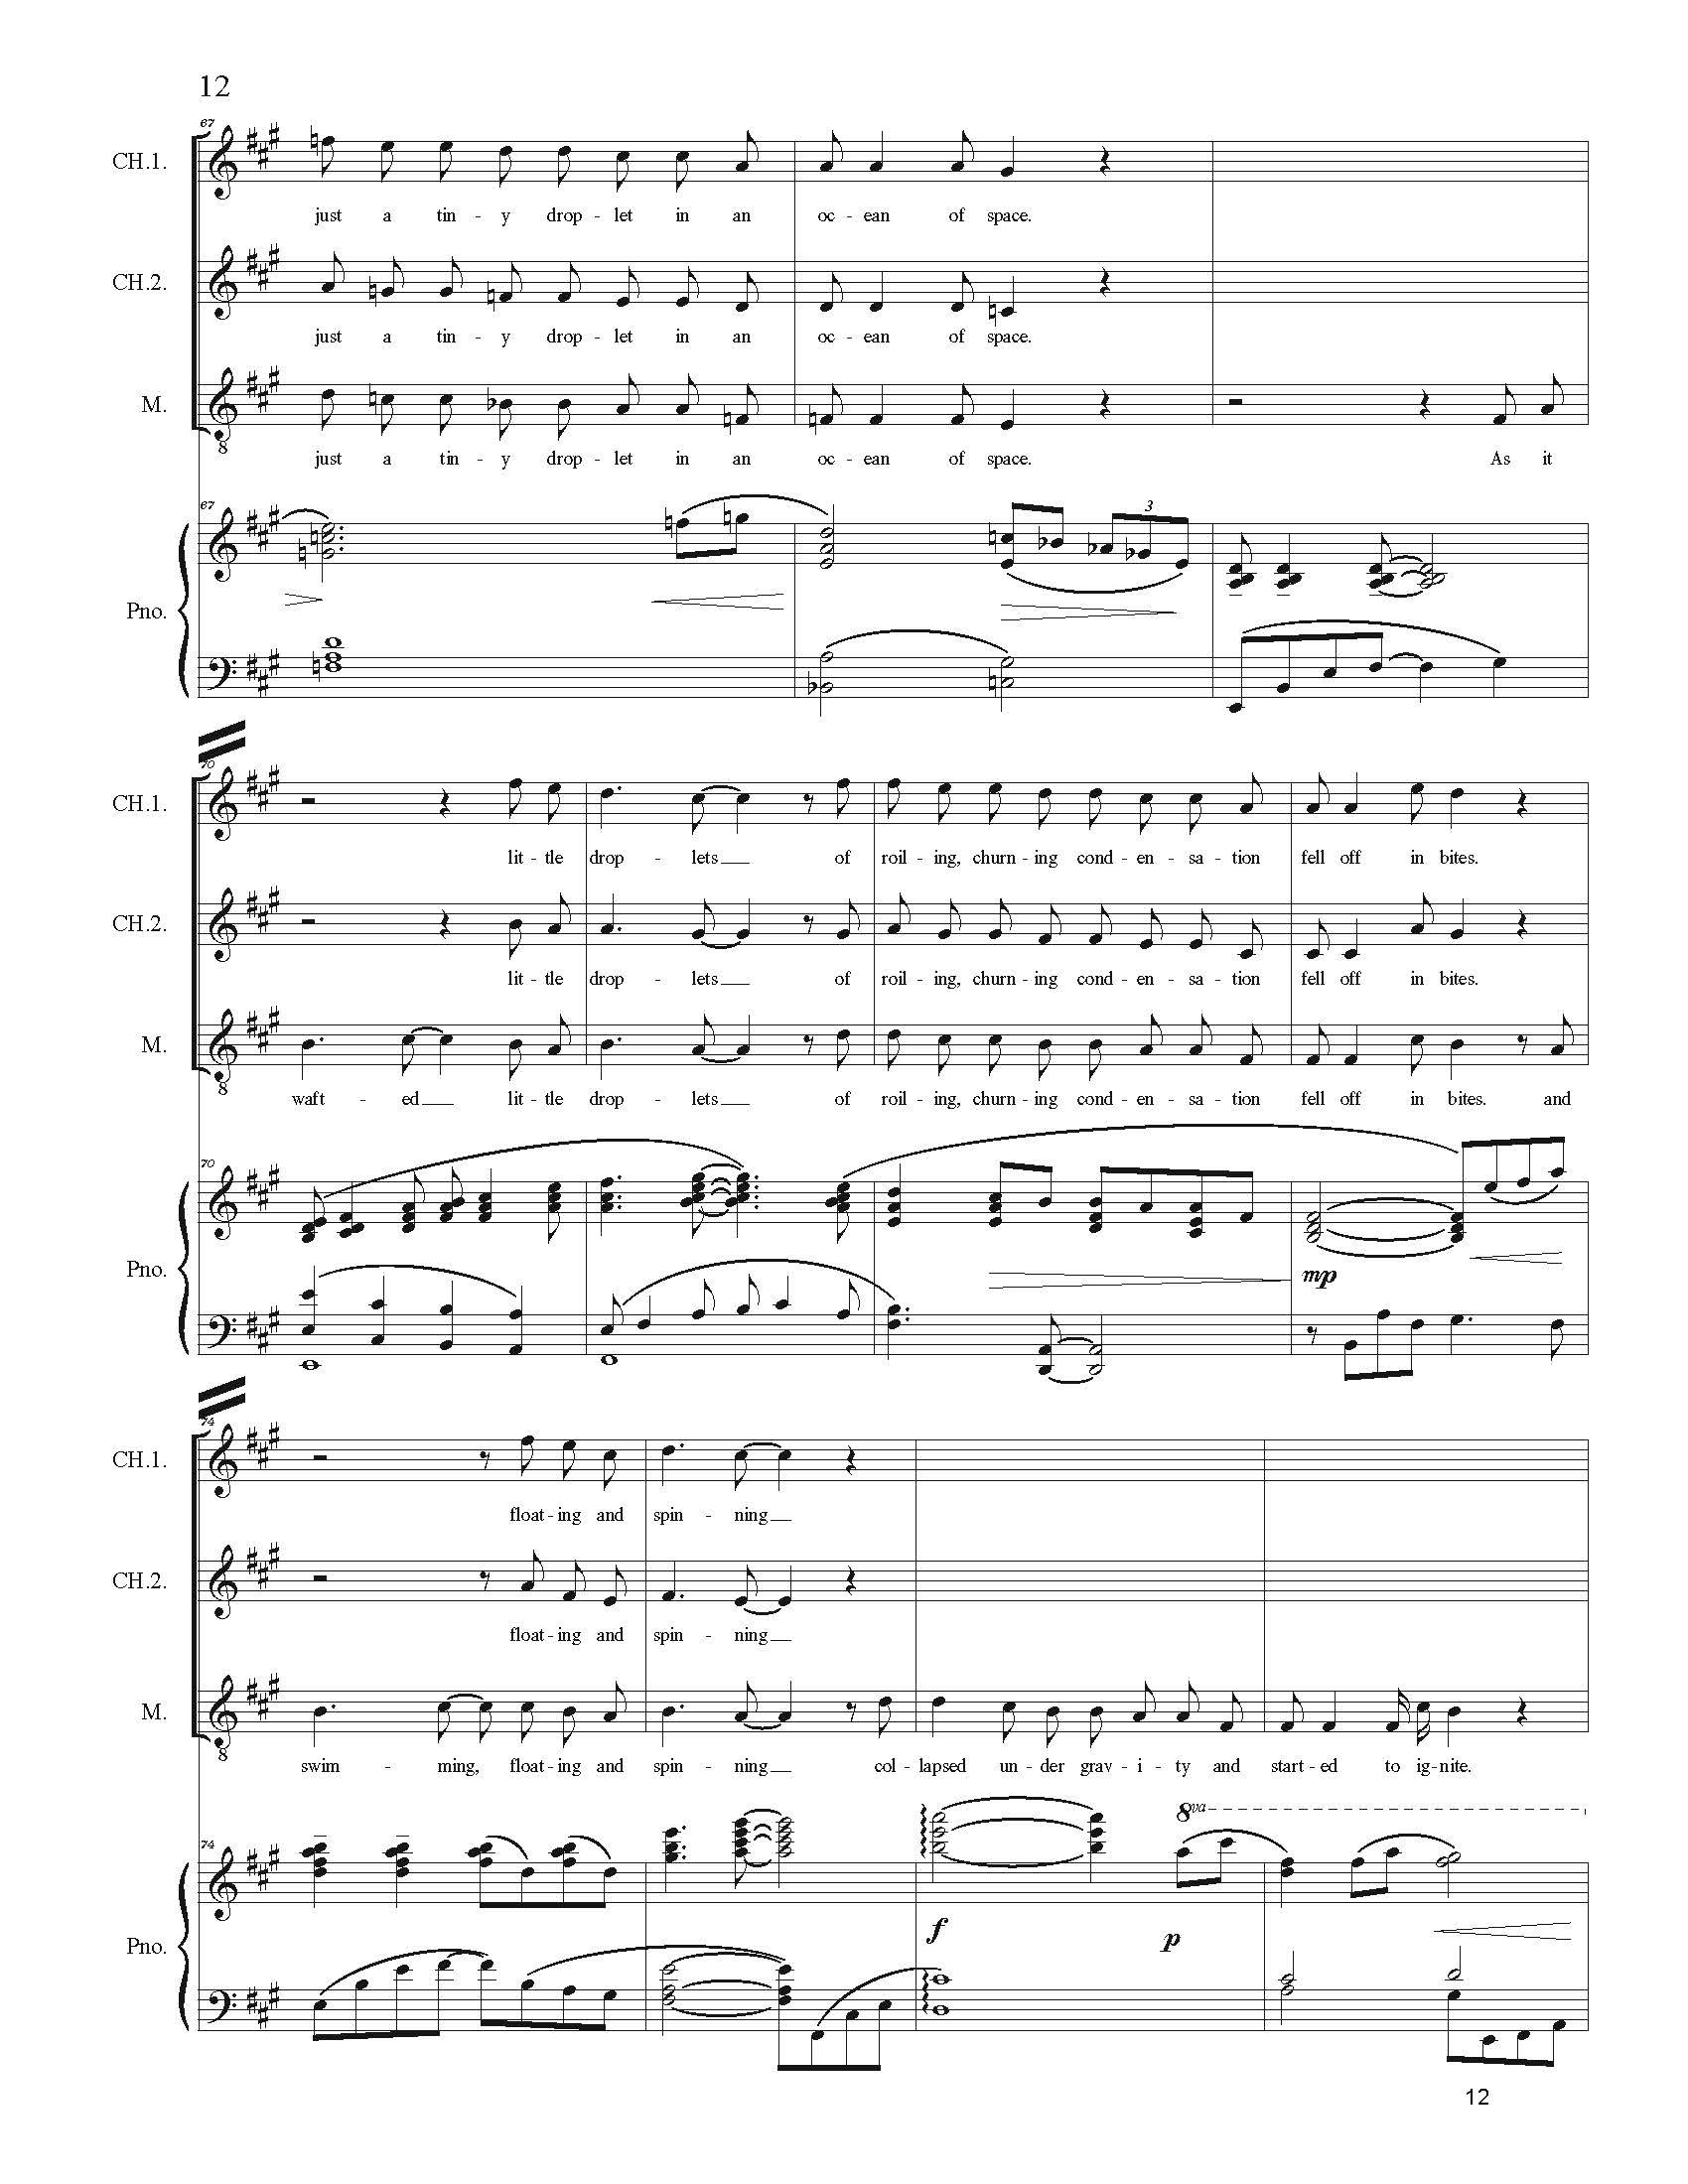 FULL PIANO VOCAL SCORE DRAFT 1 - Score_Page_012.jpg